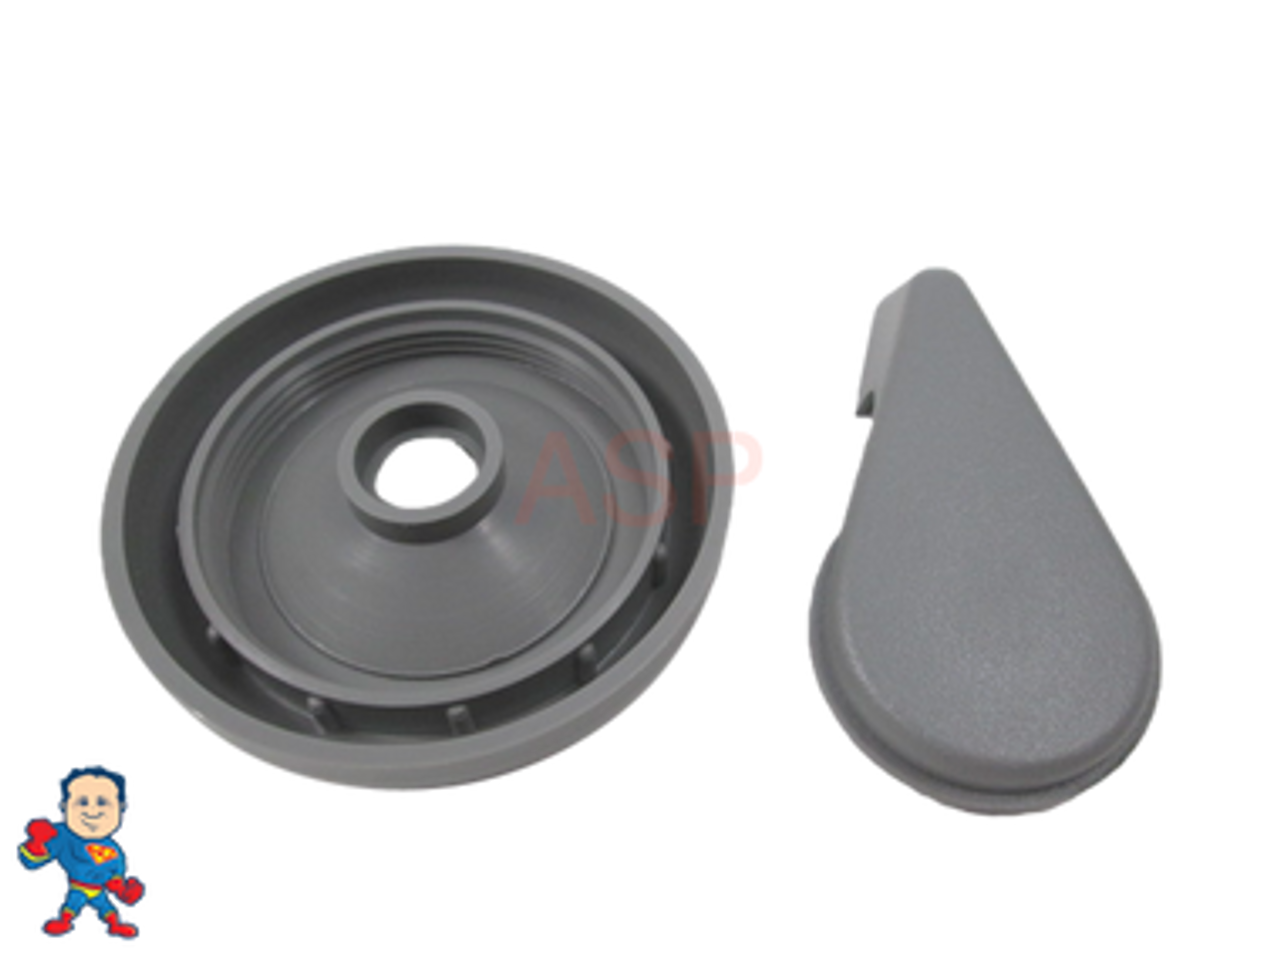 Diverter Valve Spa Gray Hot Tub O-Ring Cap Stem Kit Reinforced Handle Video